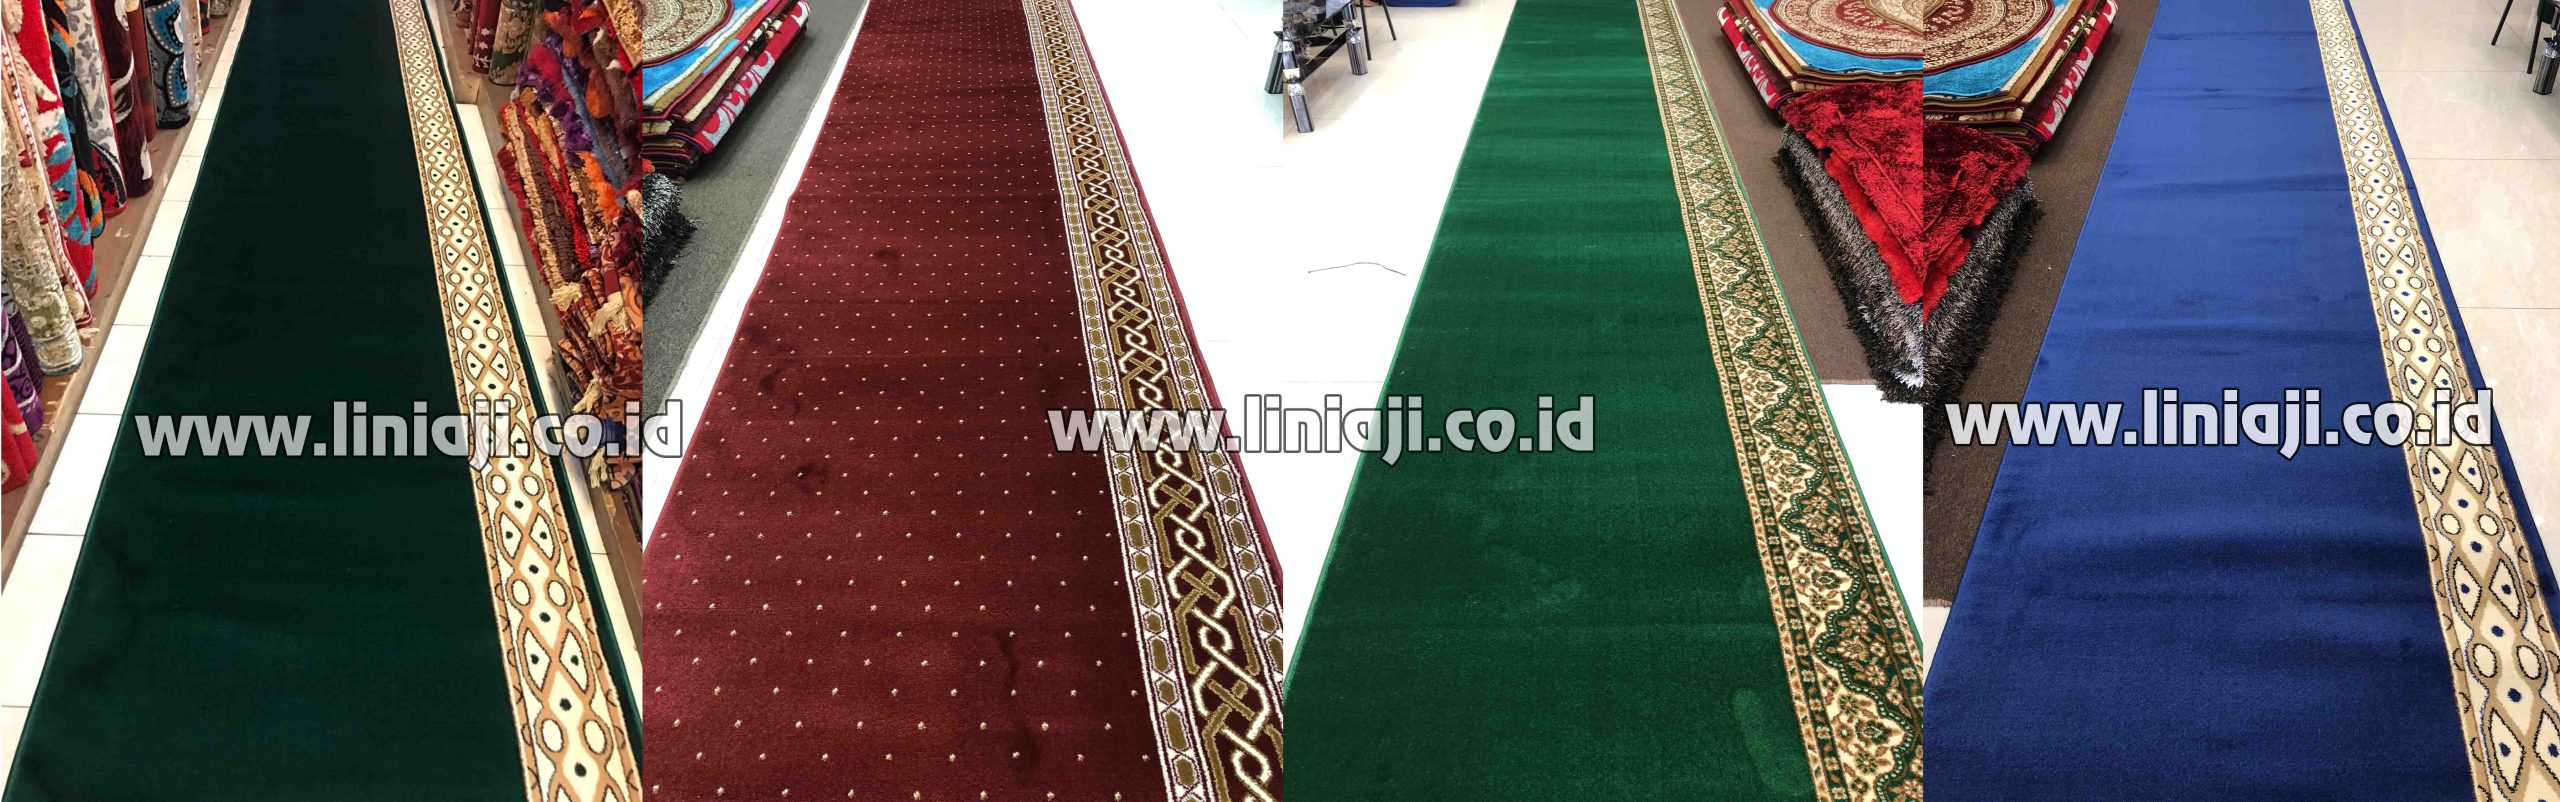 Jual Karpet Masjid Grand Mosque